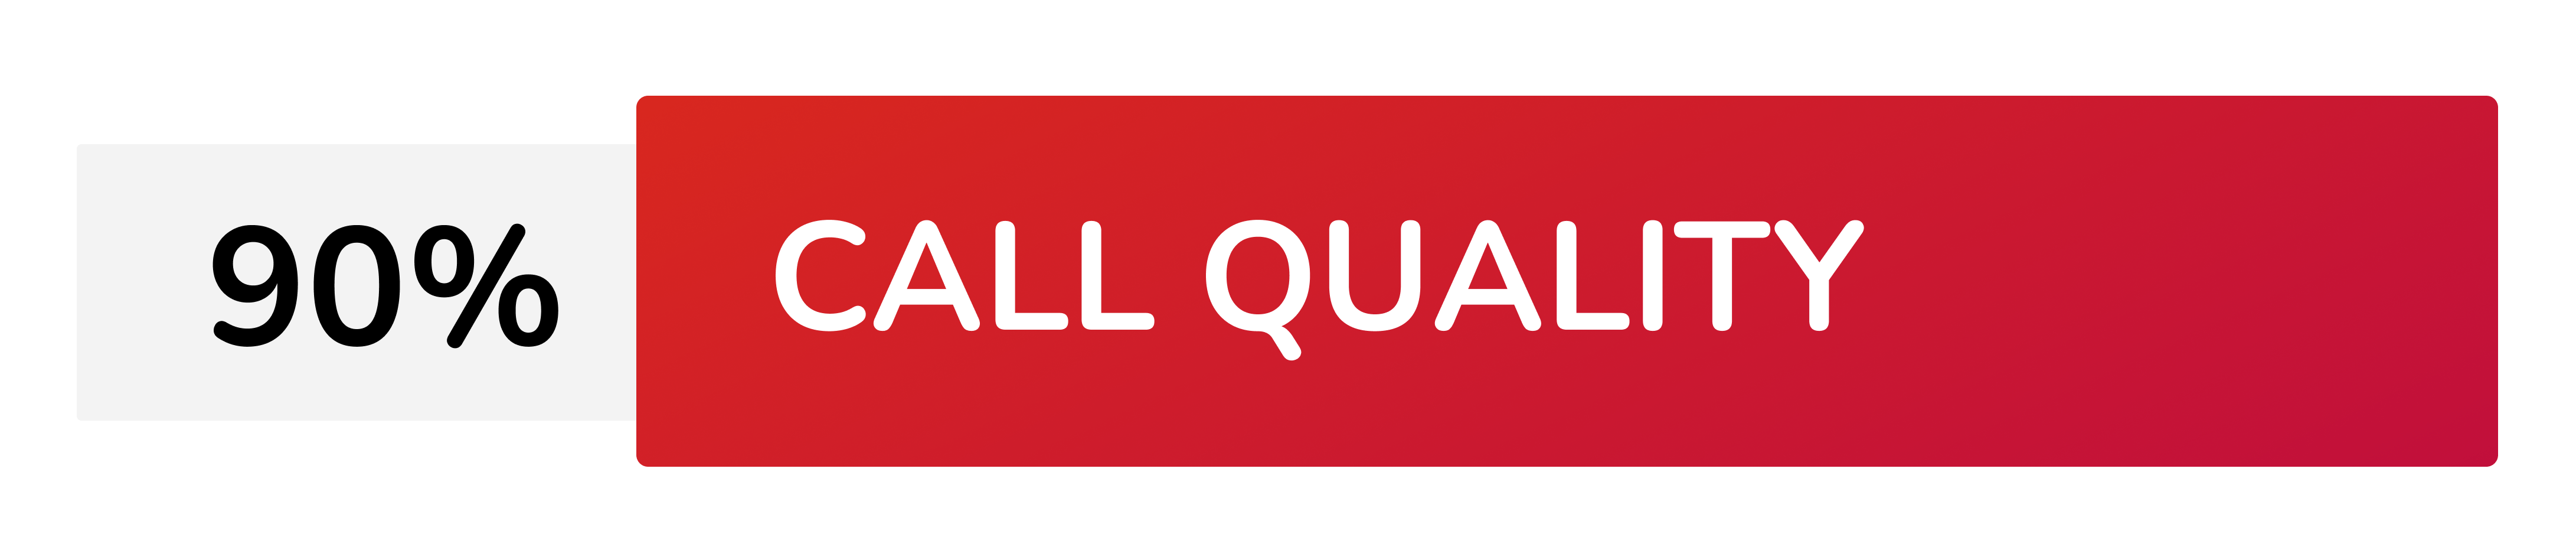 90% Call quality